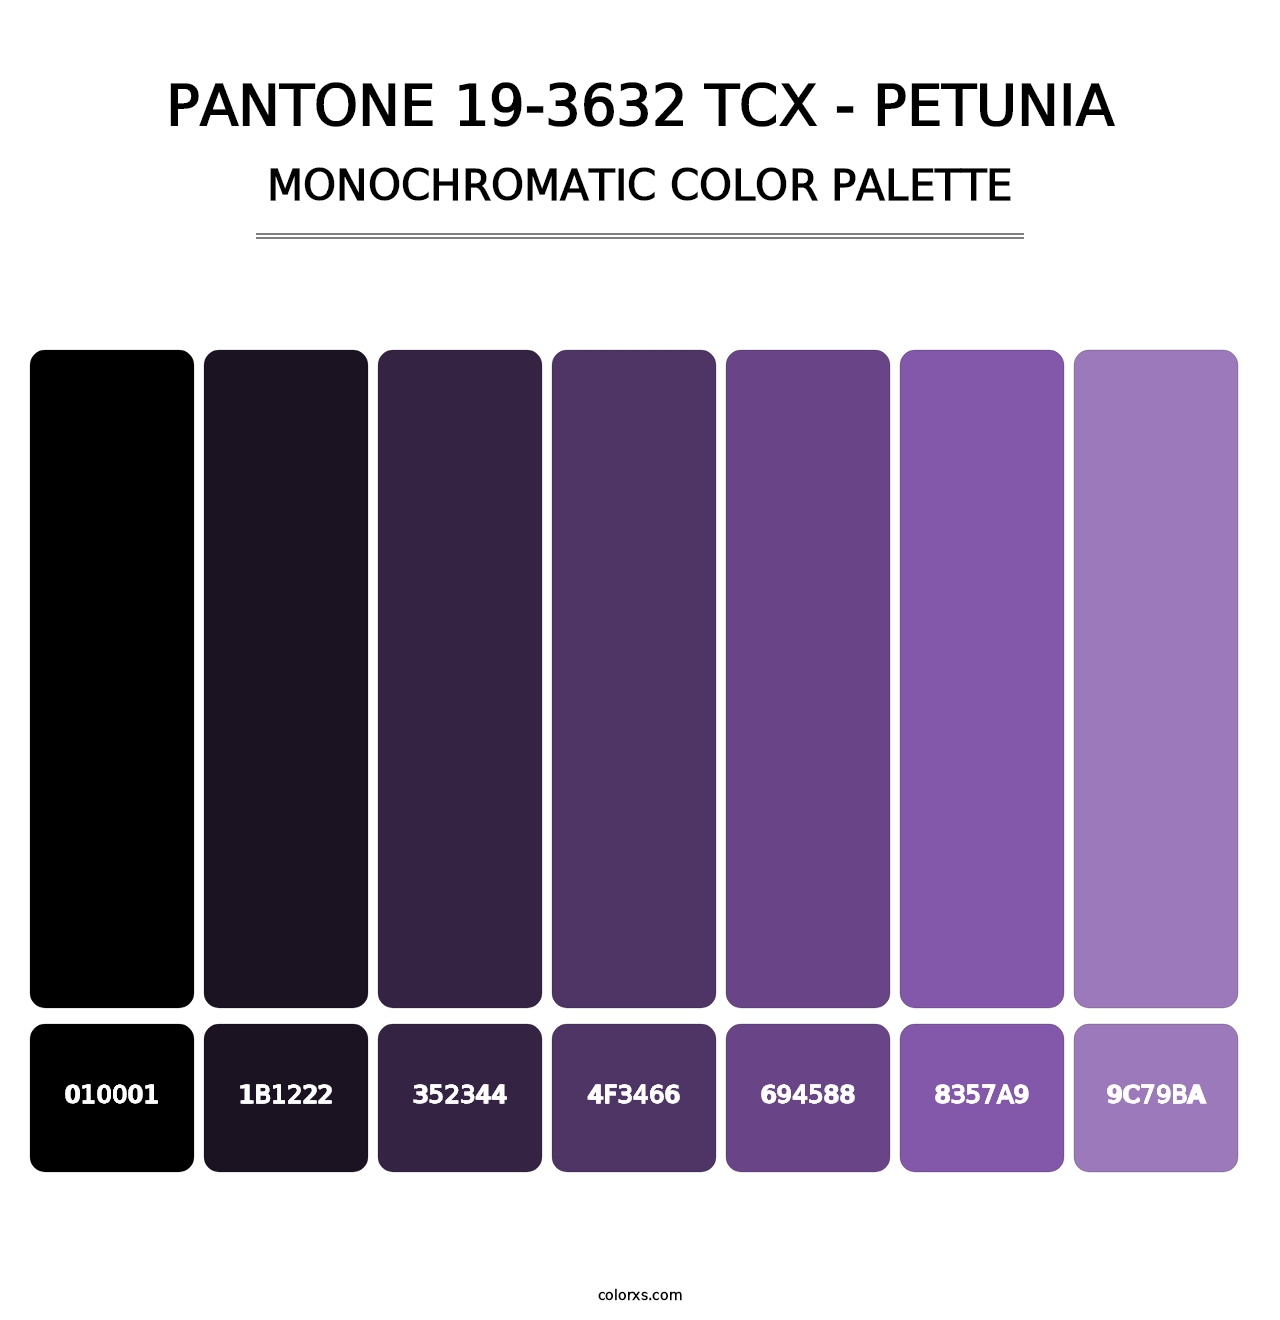 PANTONE 19-3632 TCX - Petunia - Monochromatic Color Palette